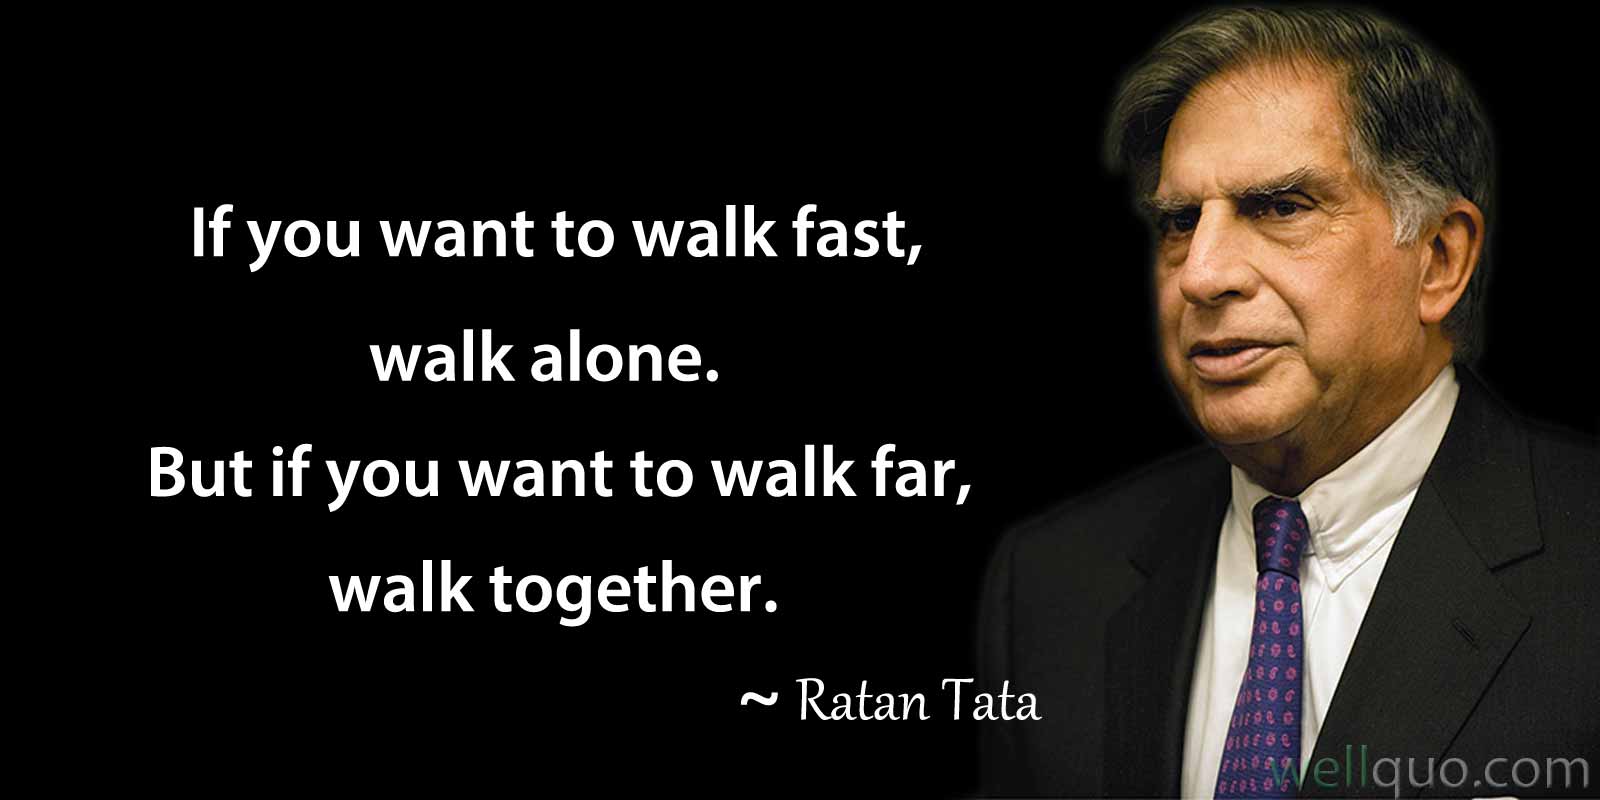 Ratan Tata motivational Quotes - Well Quo